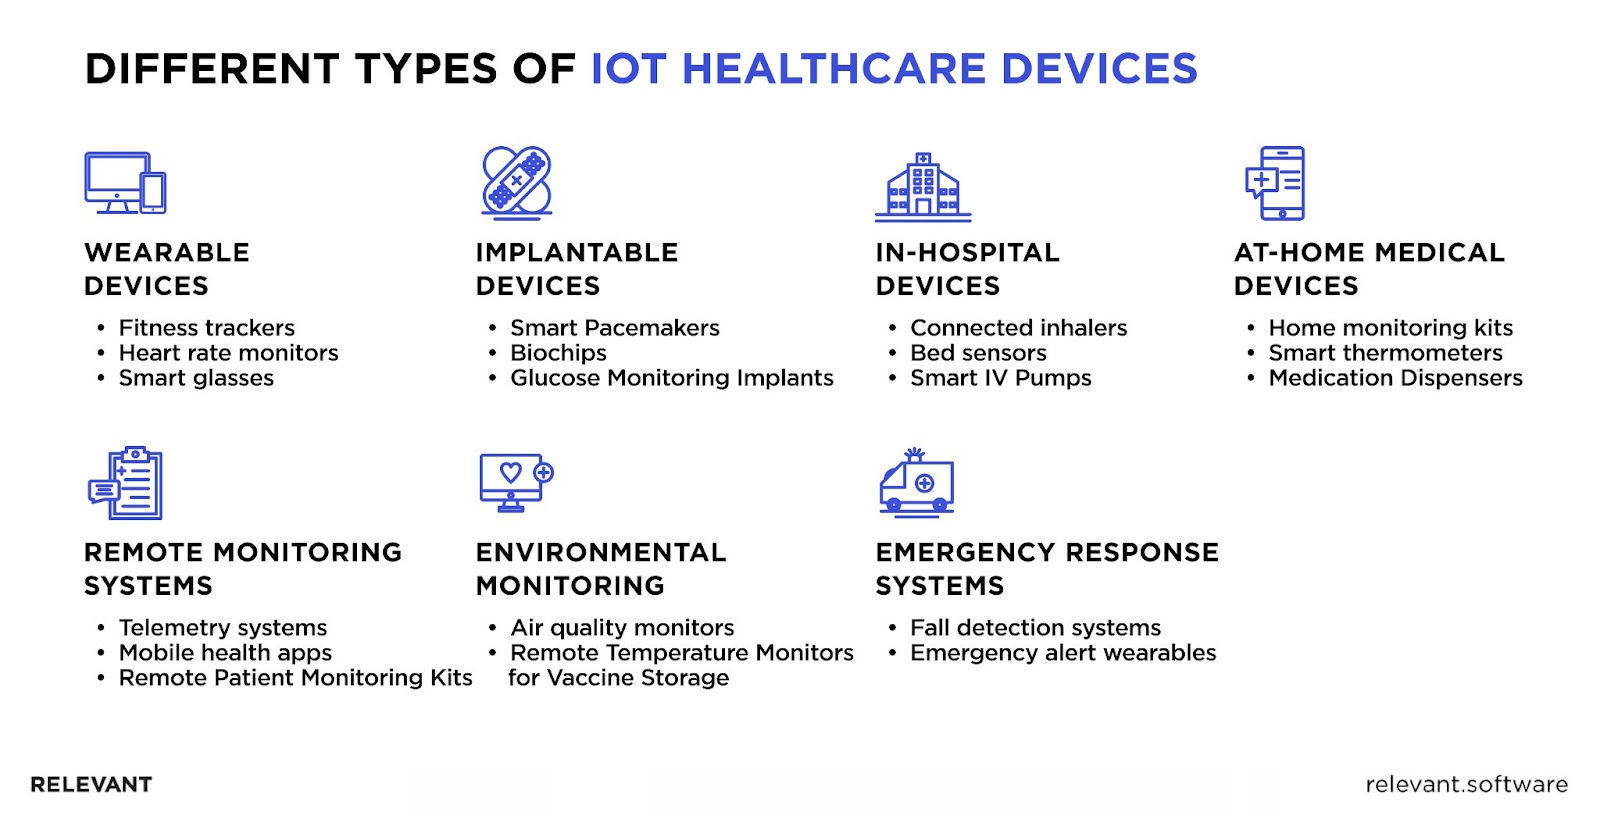 IoT Healthcare Devices